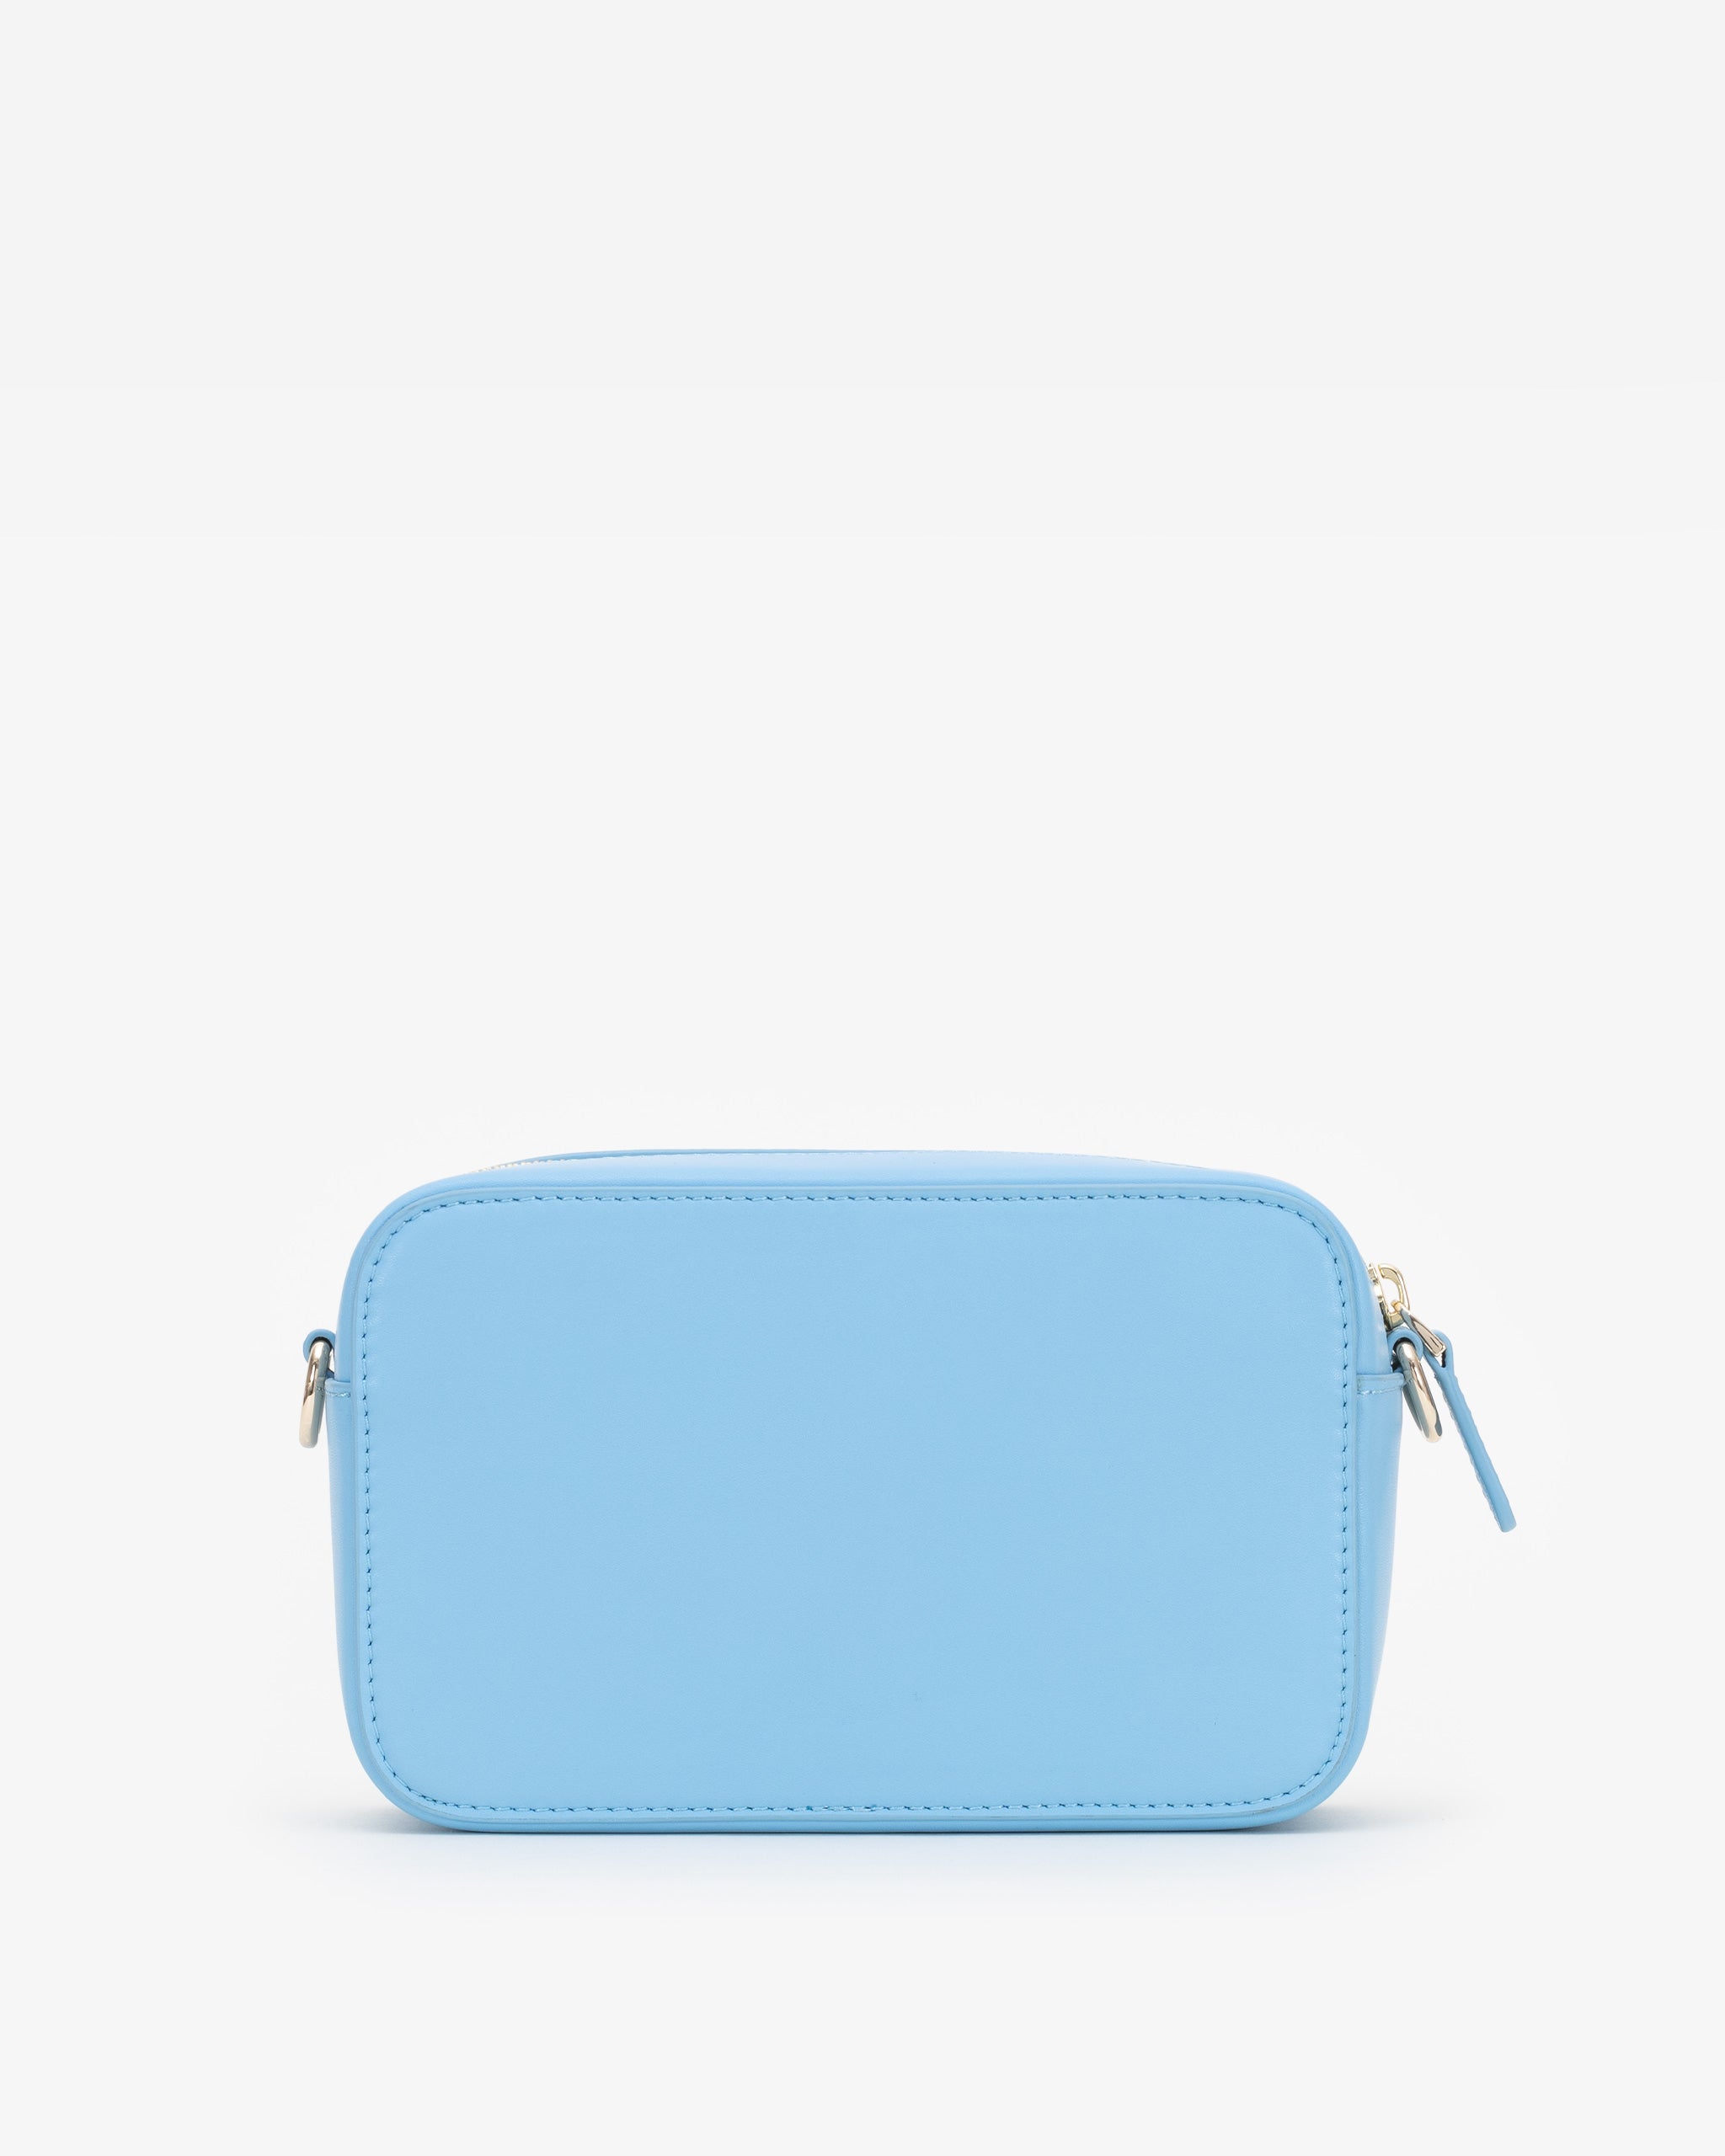 Zip Crossbody Bag in Sky Blue with Personalised Hardware